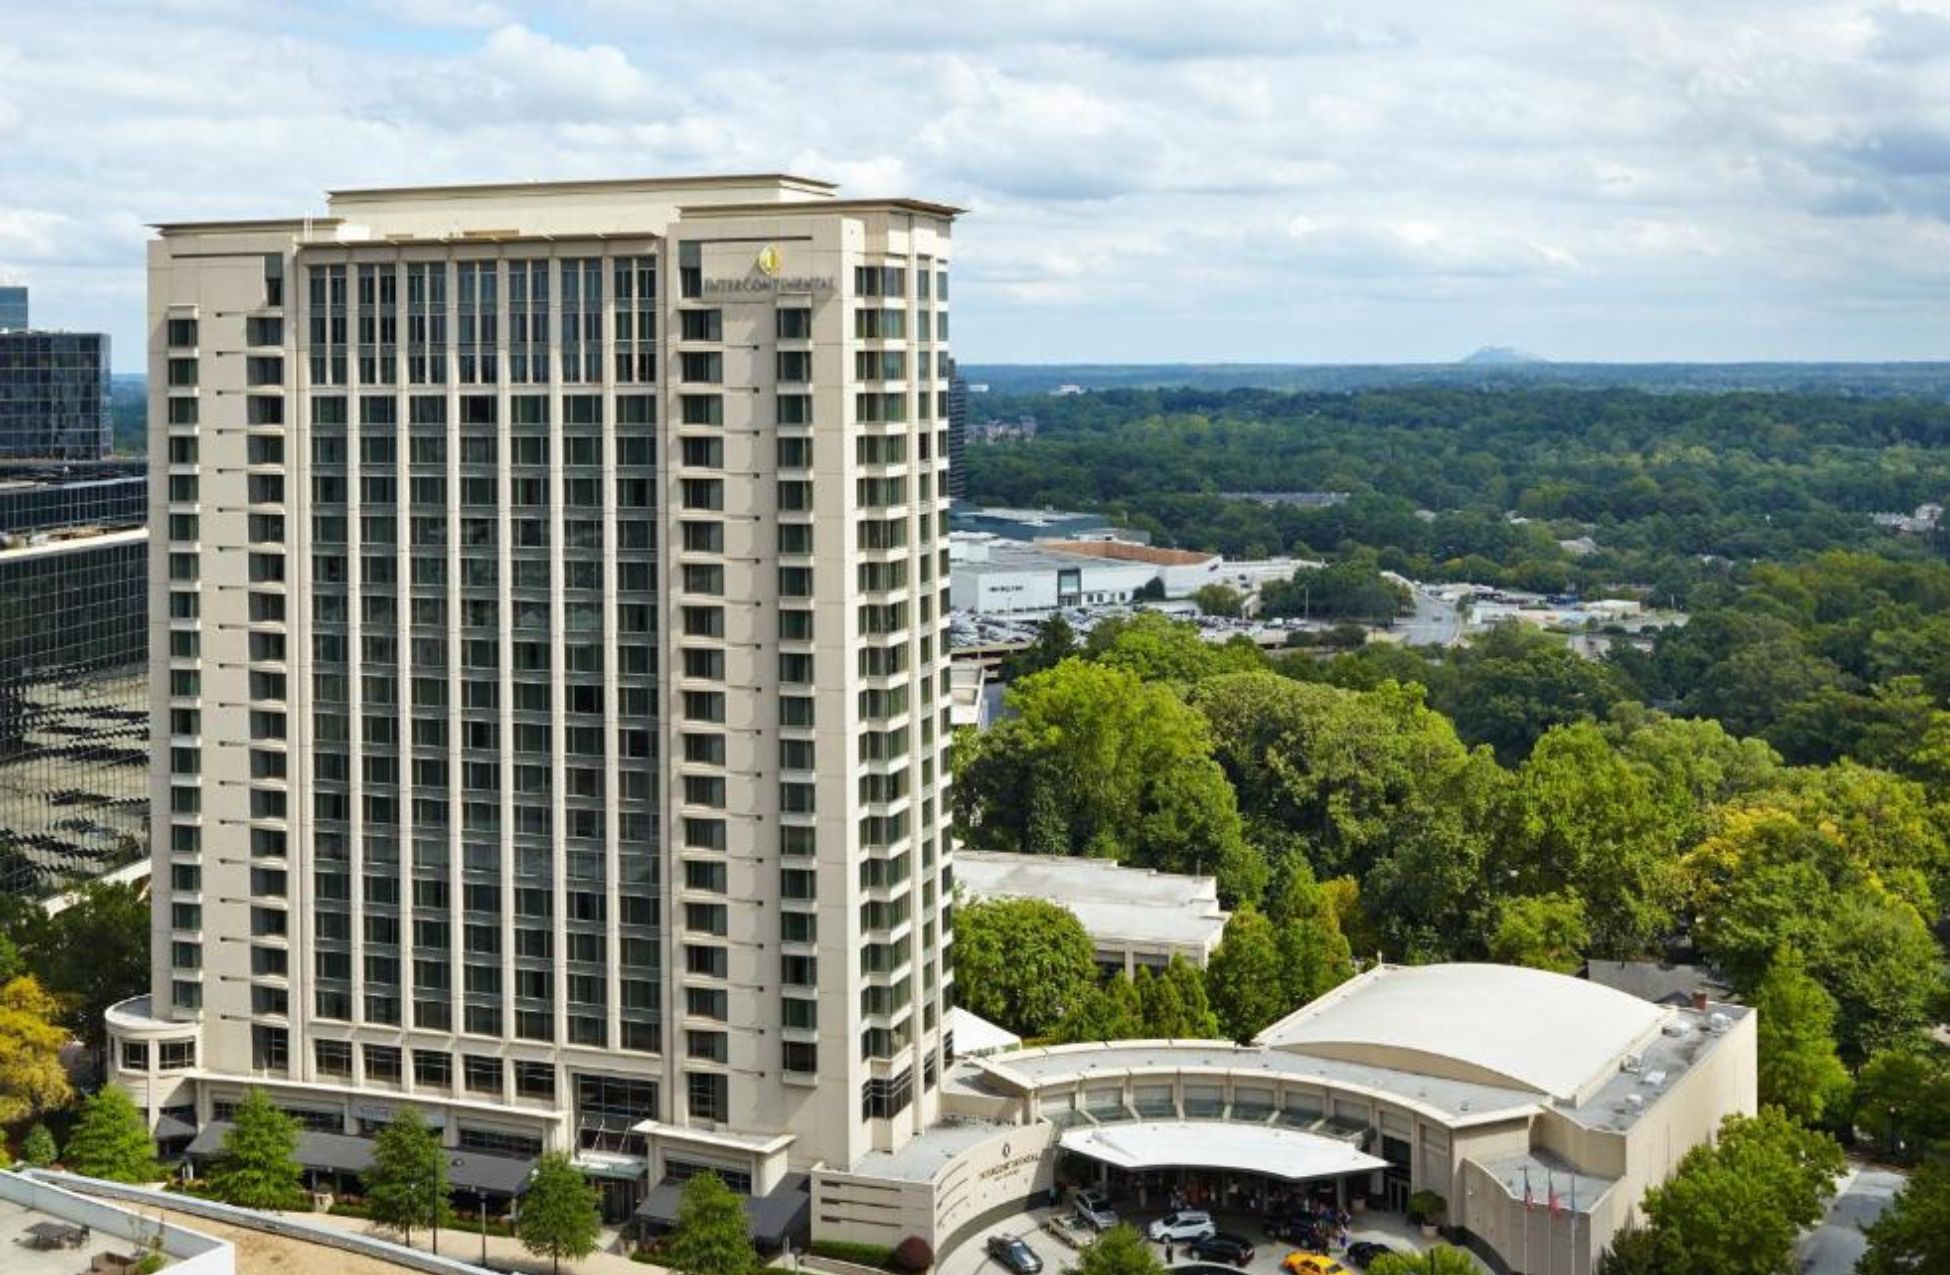 InterContinental Buckhead Atlanta - Best Hotels In Atlanta